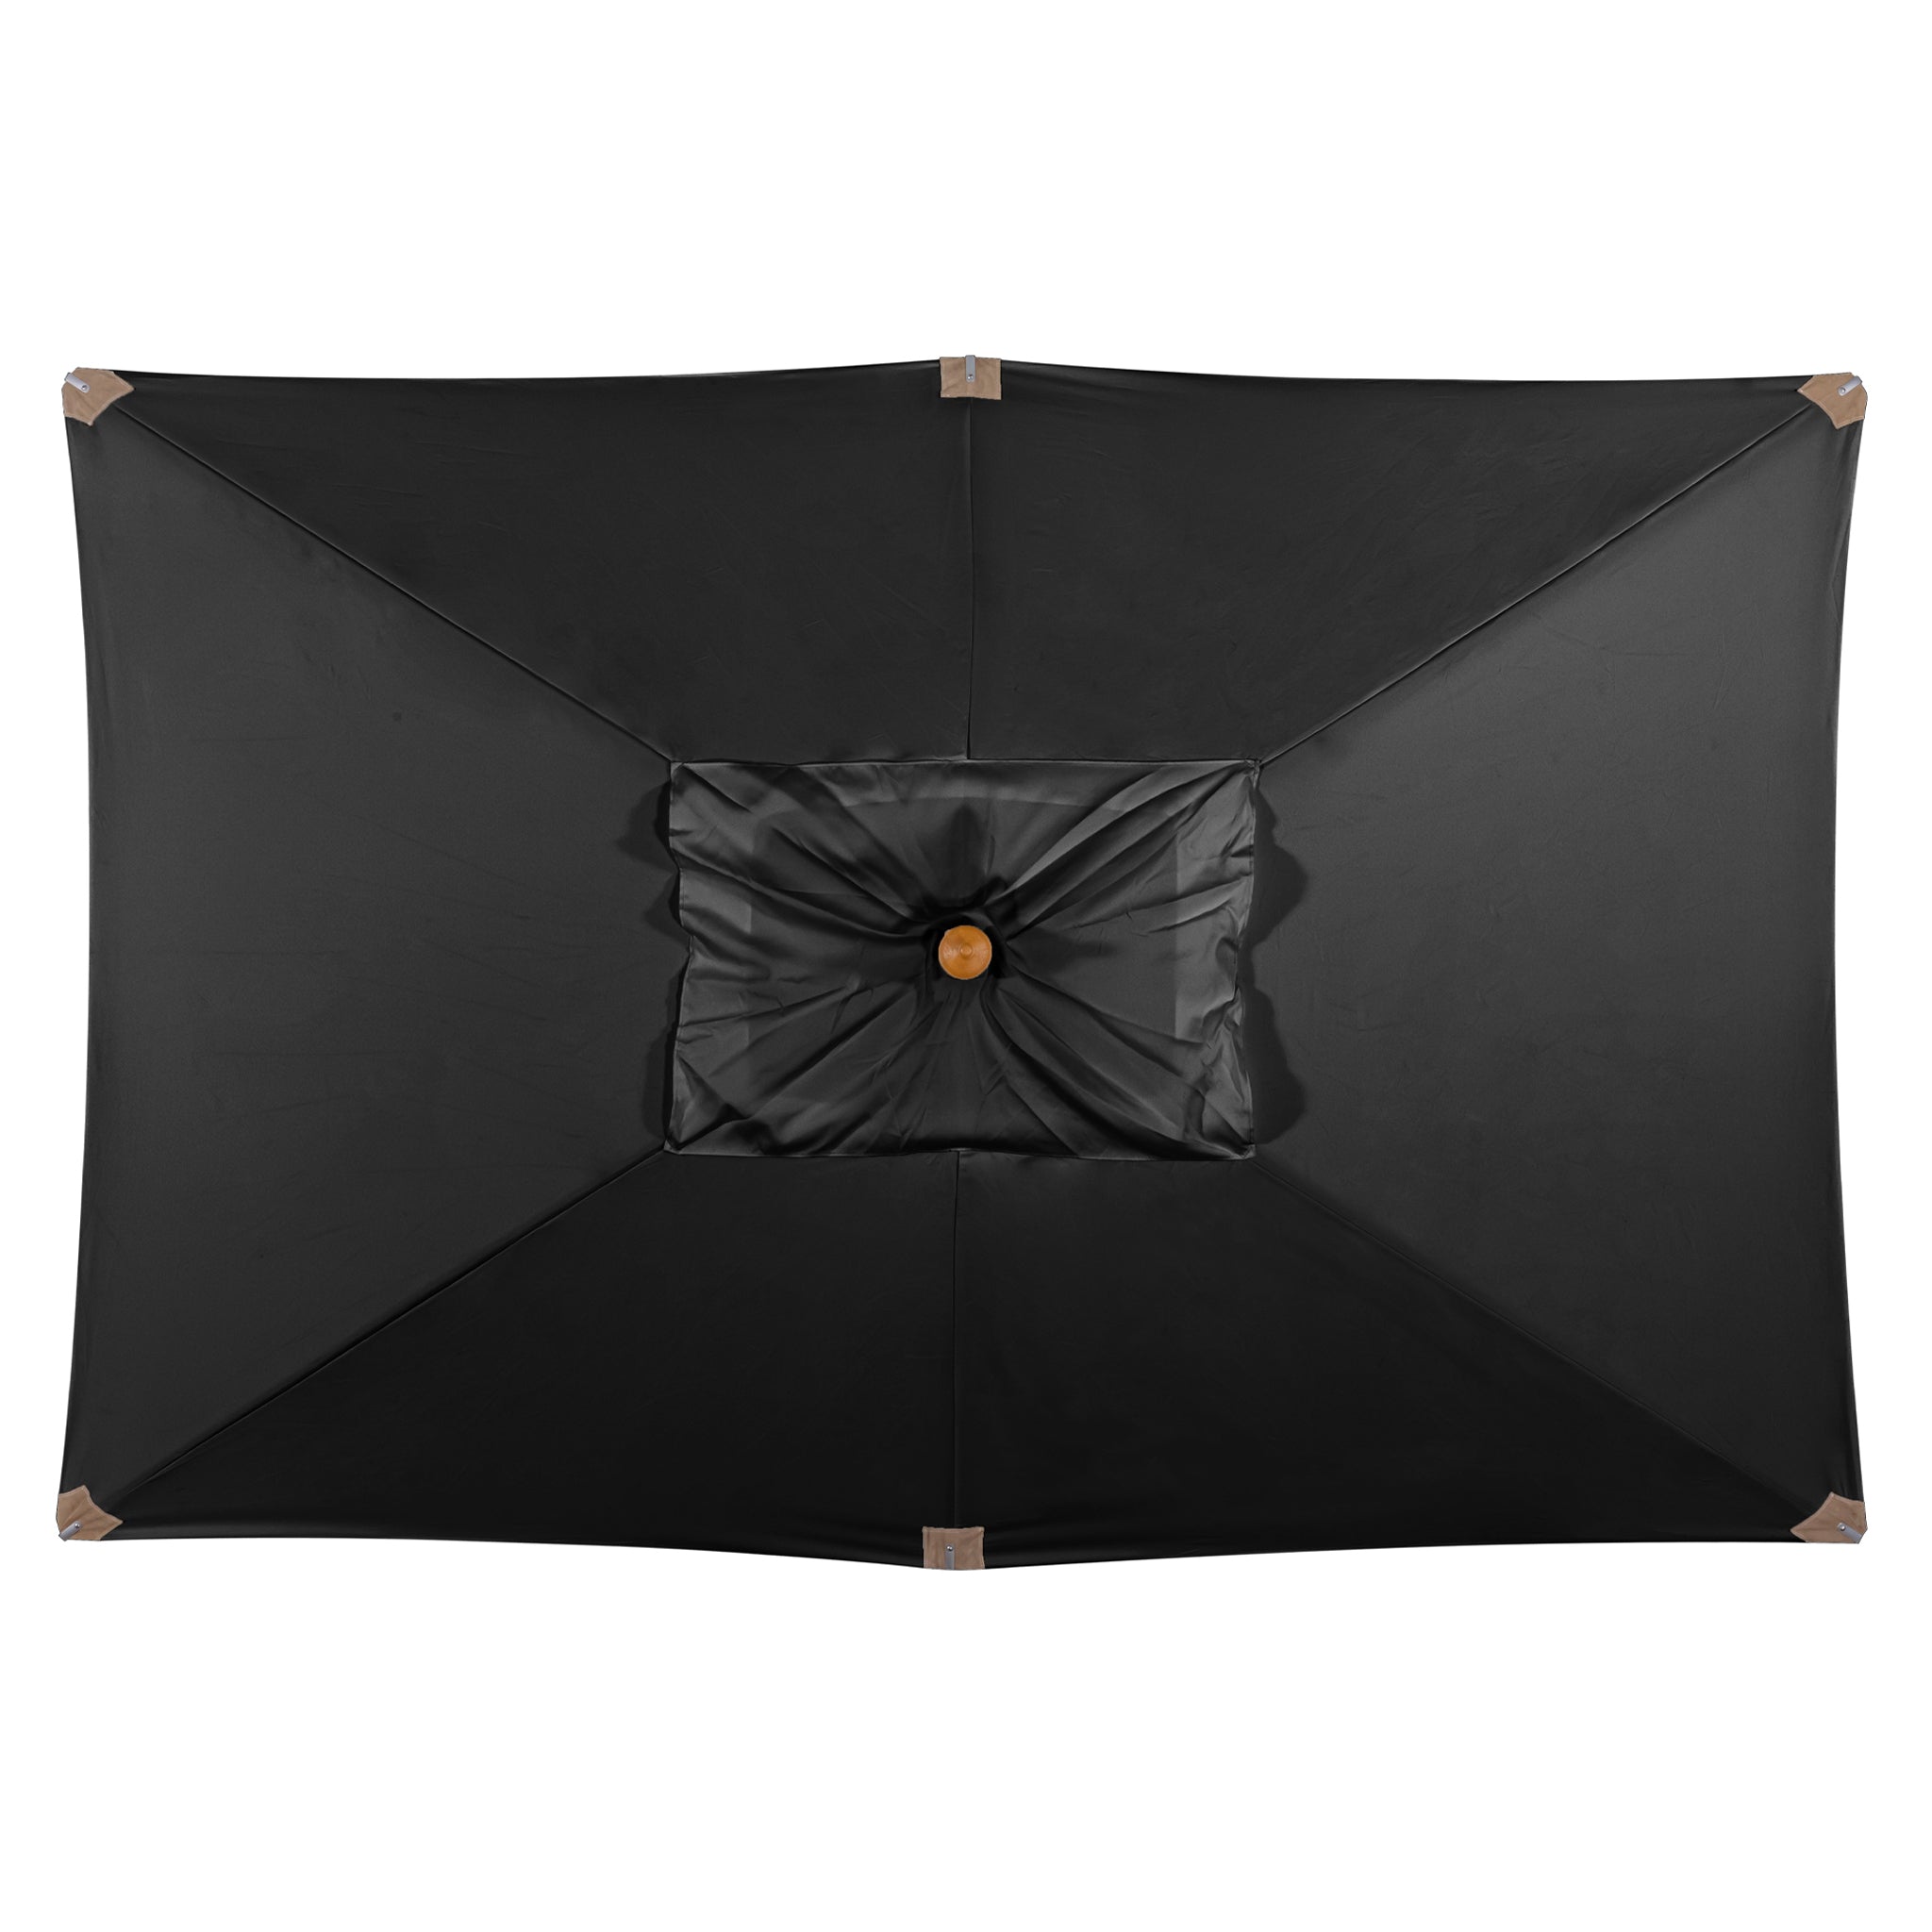 Styx 3m x 2m Rectangular Deluxe Wooden Parasol in Black